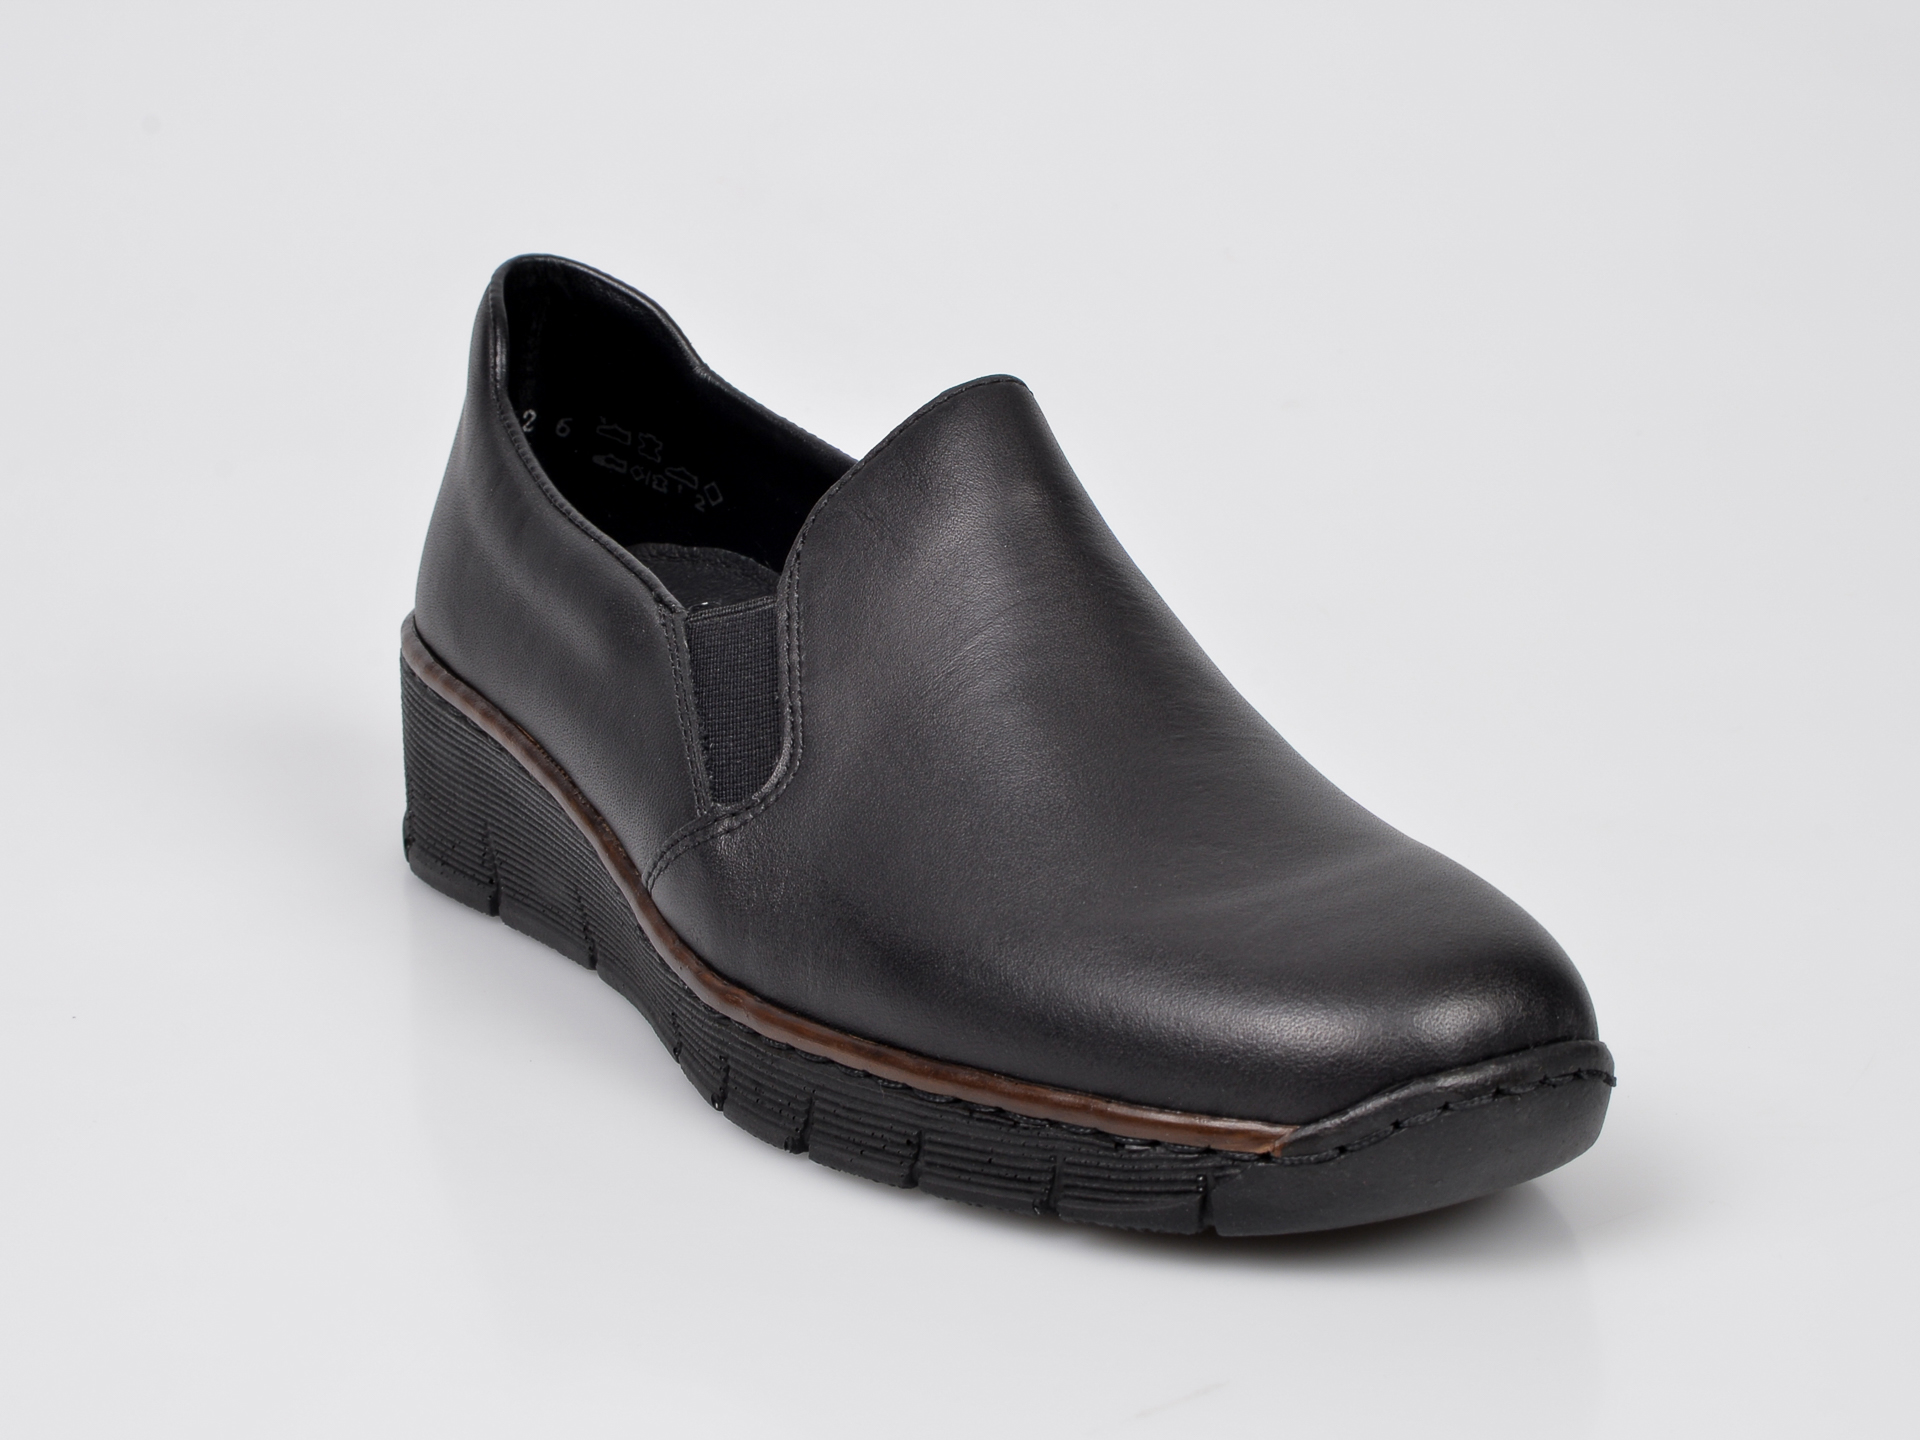 Pantofi RIEKER negri, 53766, din piele naturala